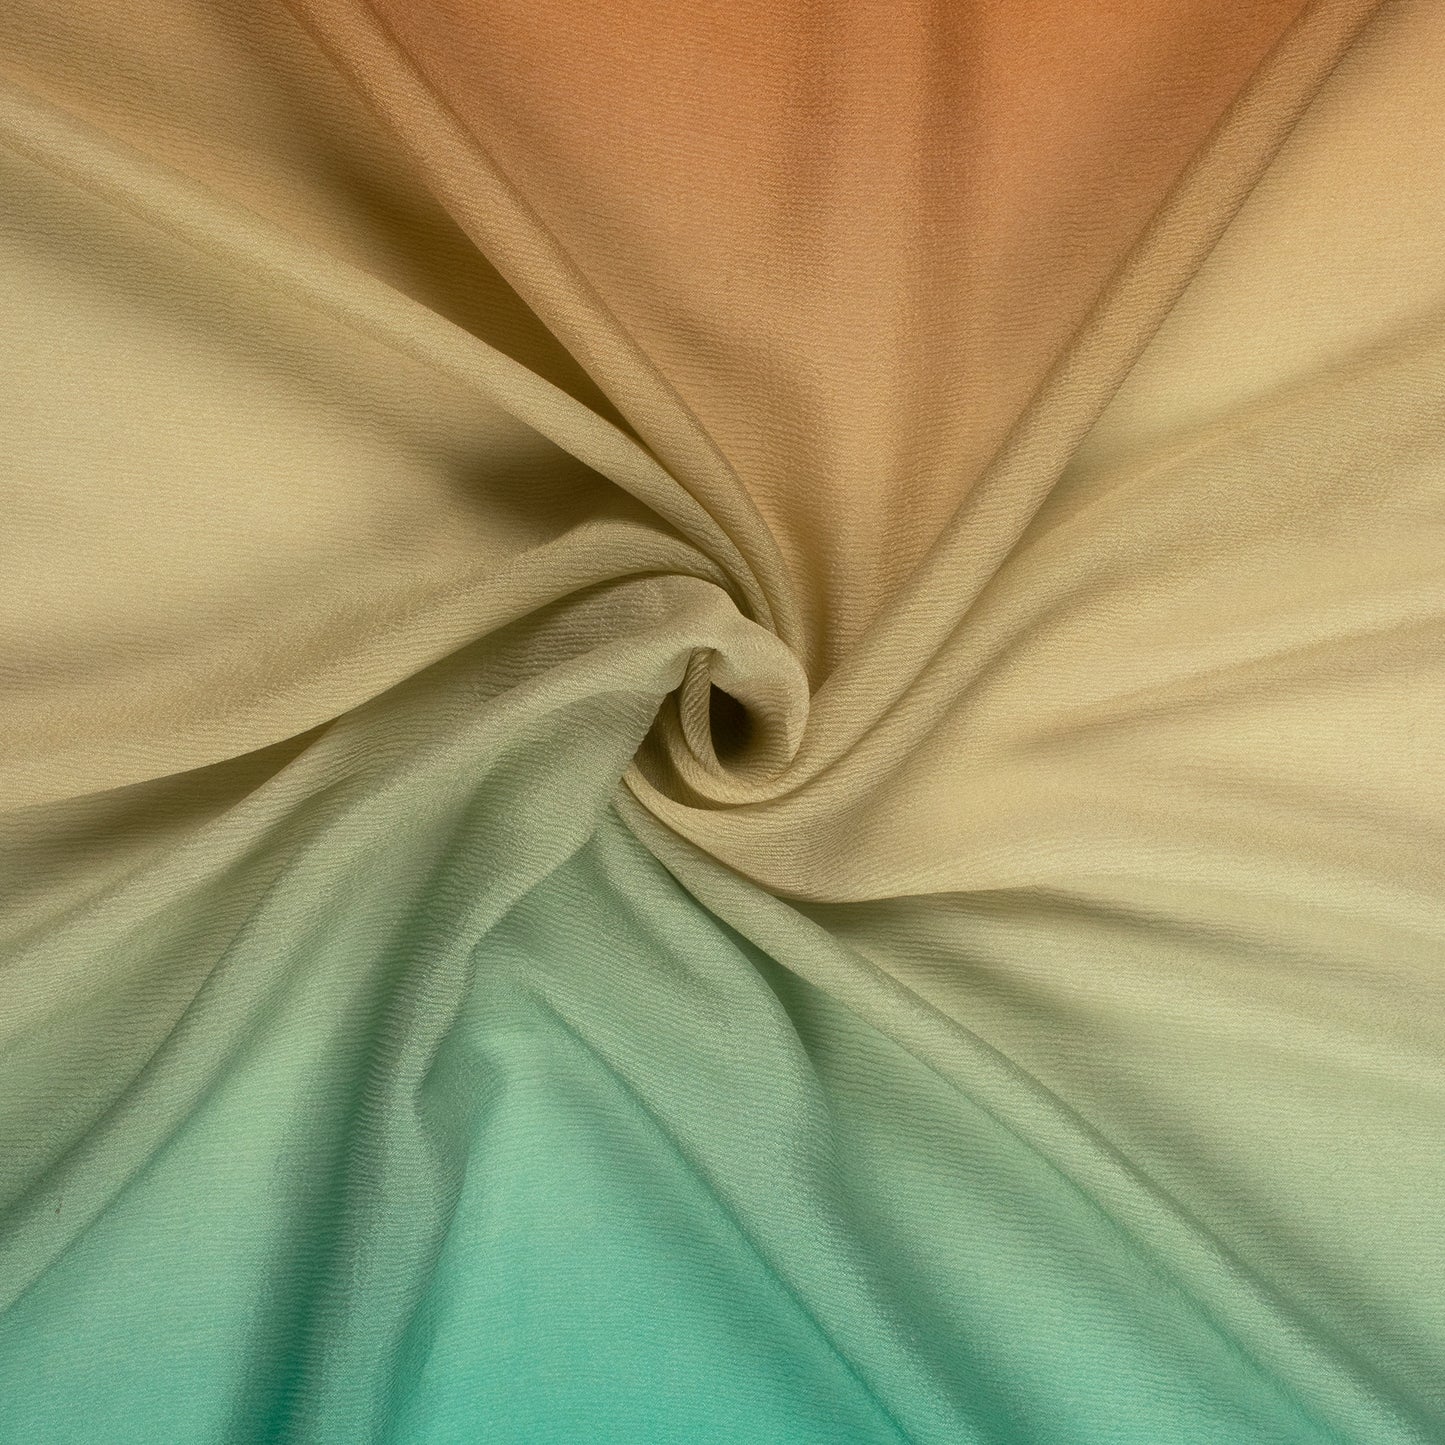 Aqua Green Ombre Digital Print Viscose Chinnon Chiffon Fabric